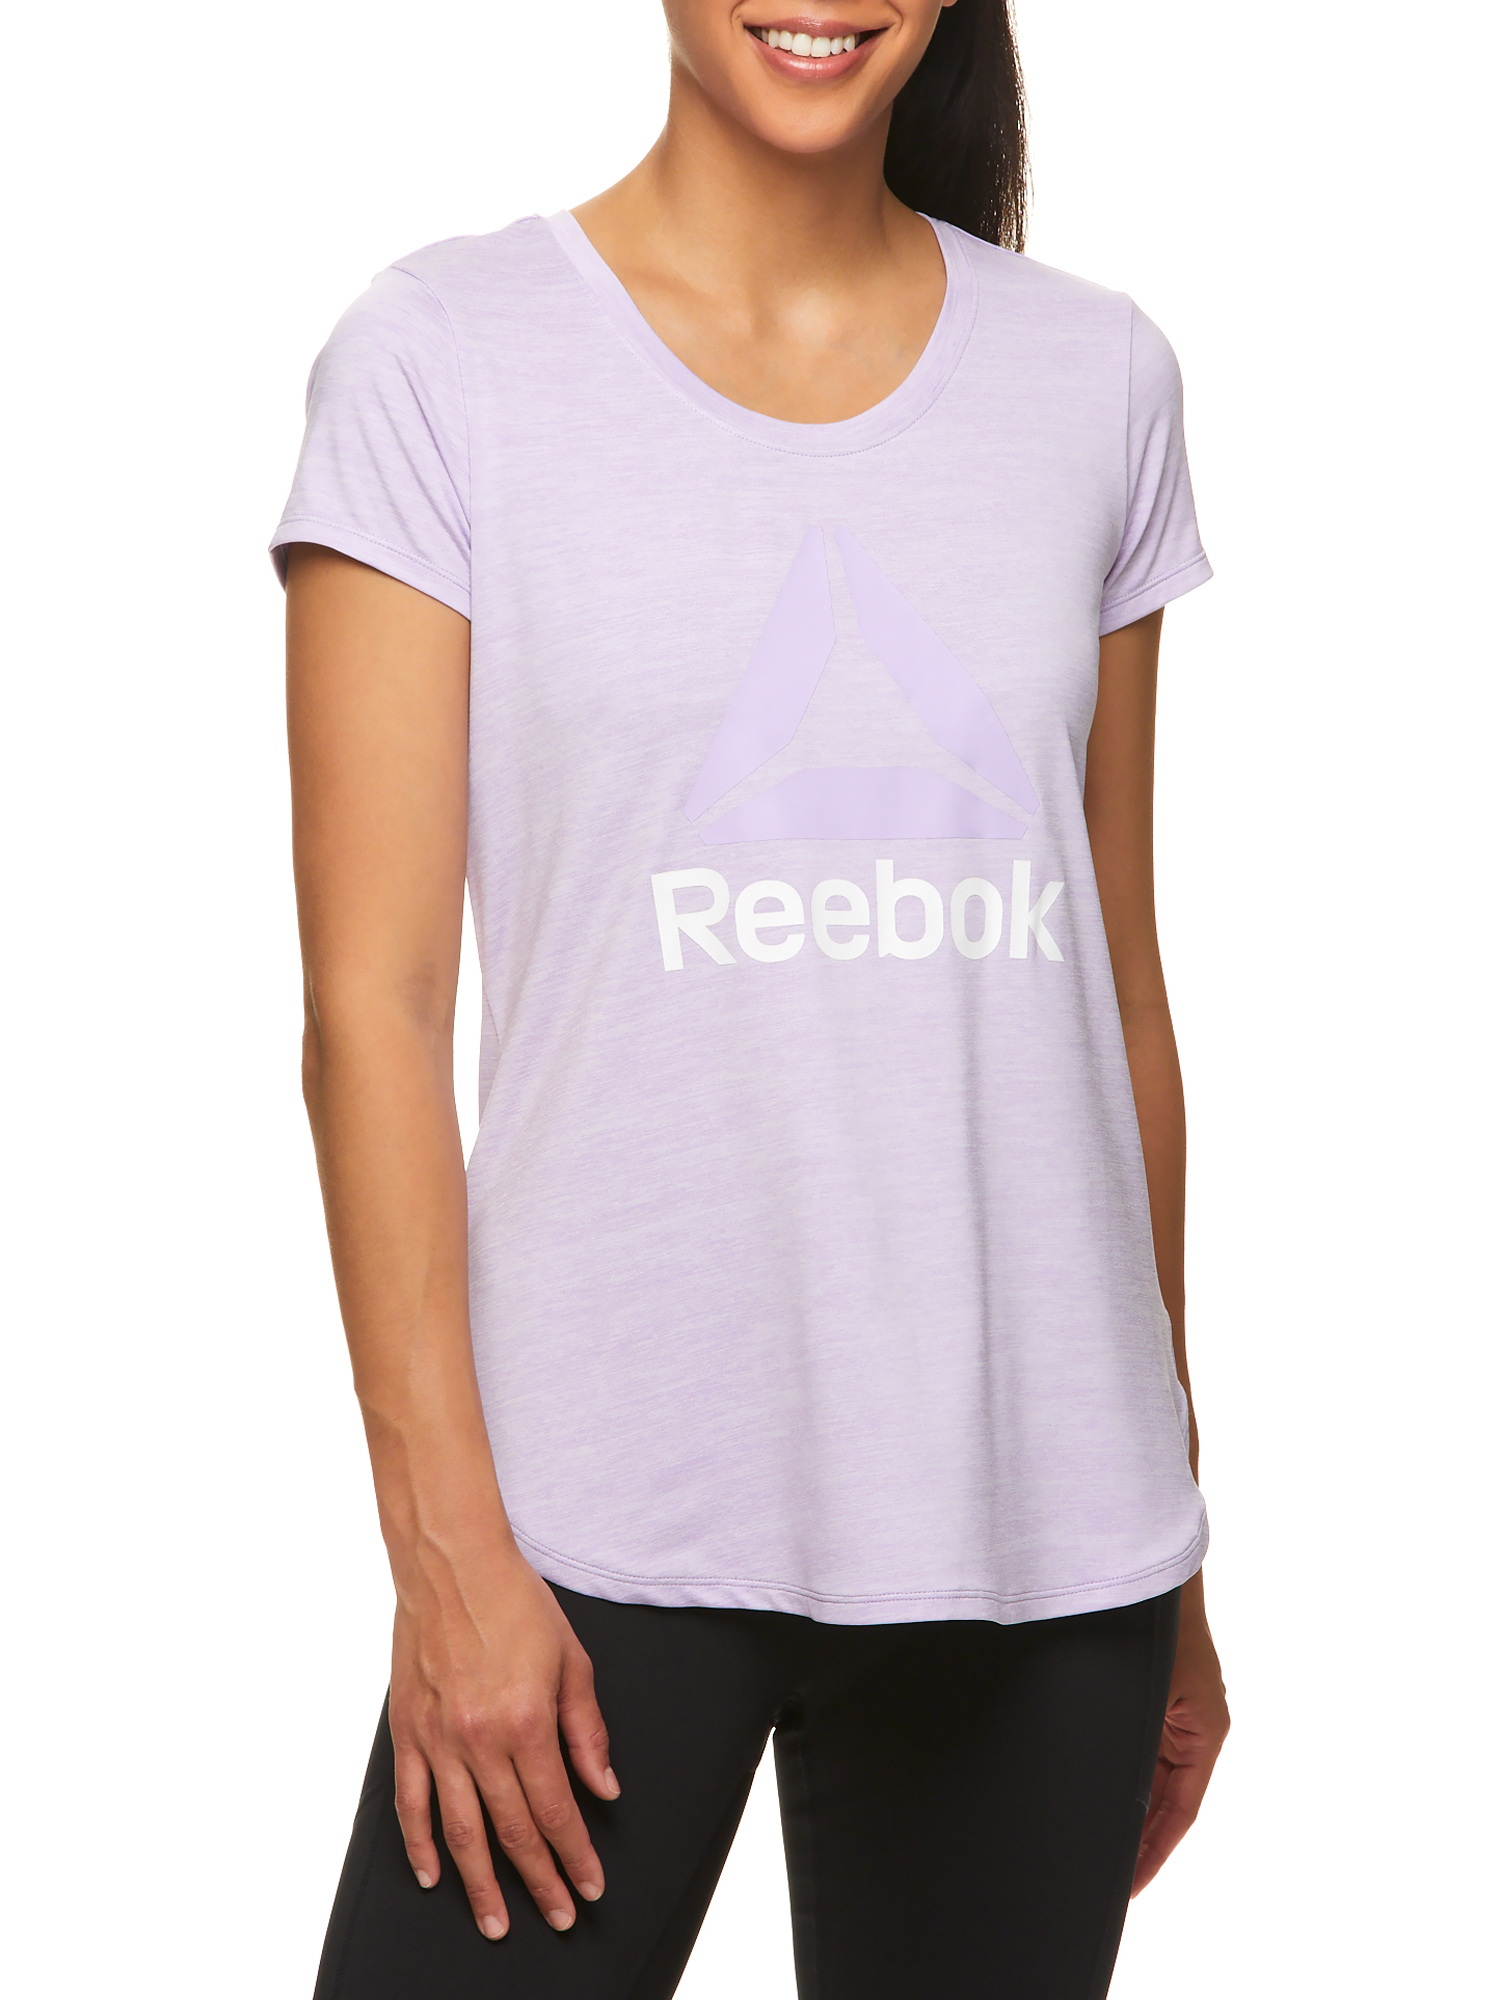 Reebok Women's Graphic Short Sleeve T-Shirt - image 1 of 4